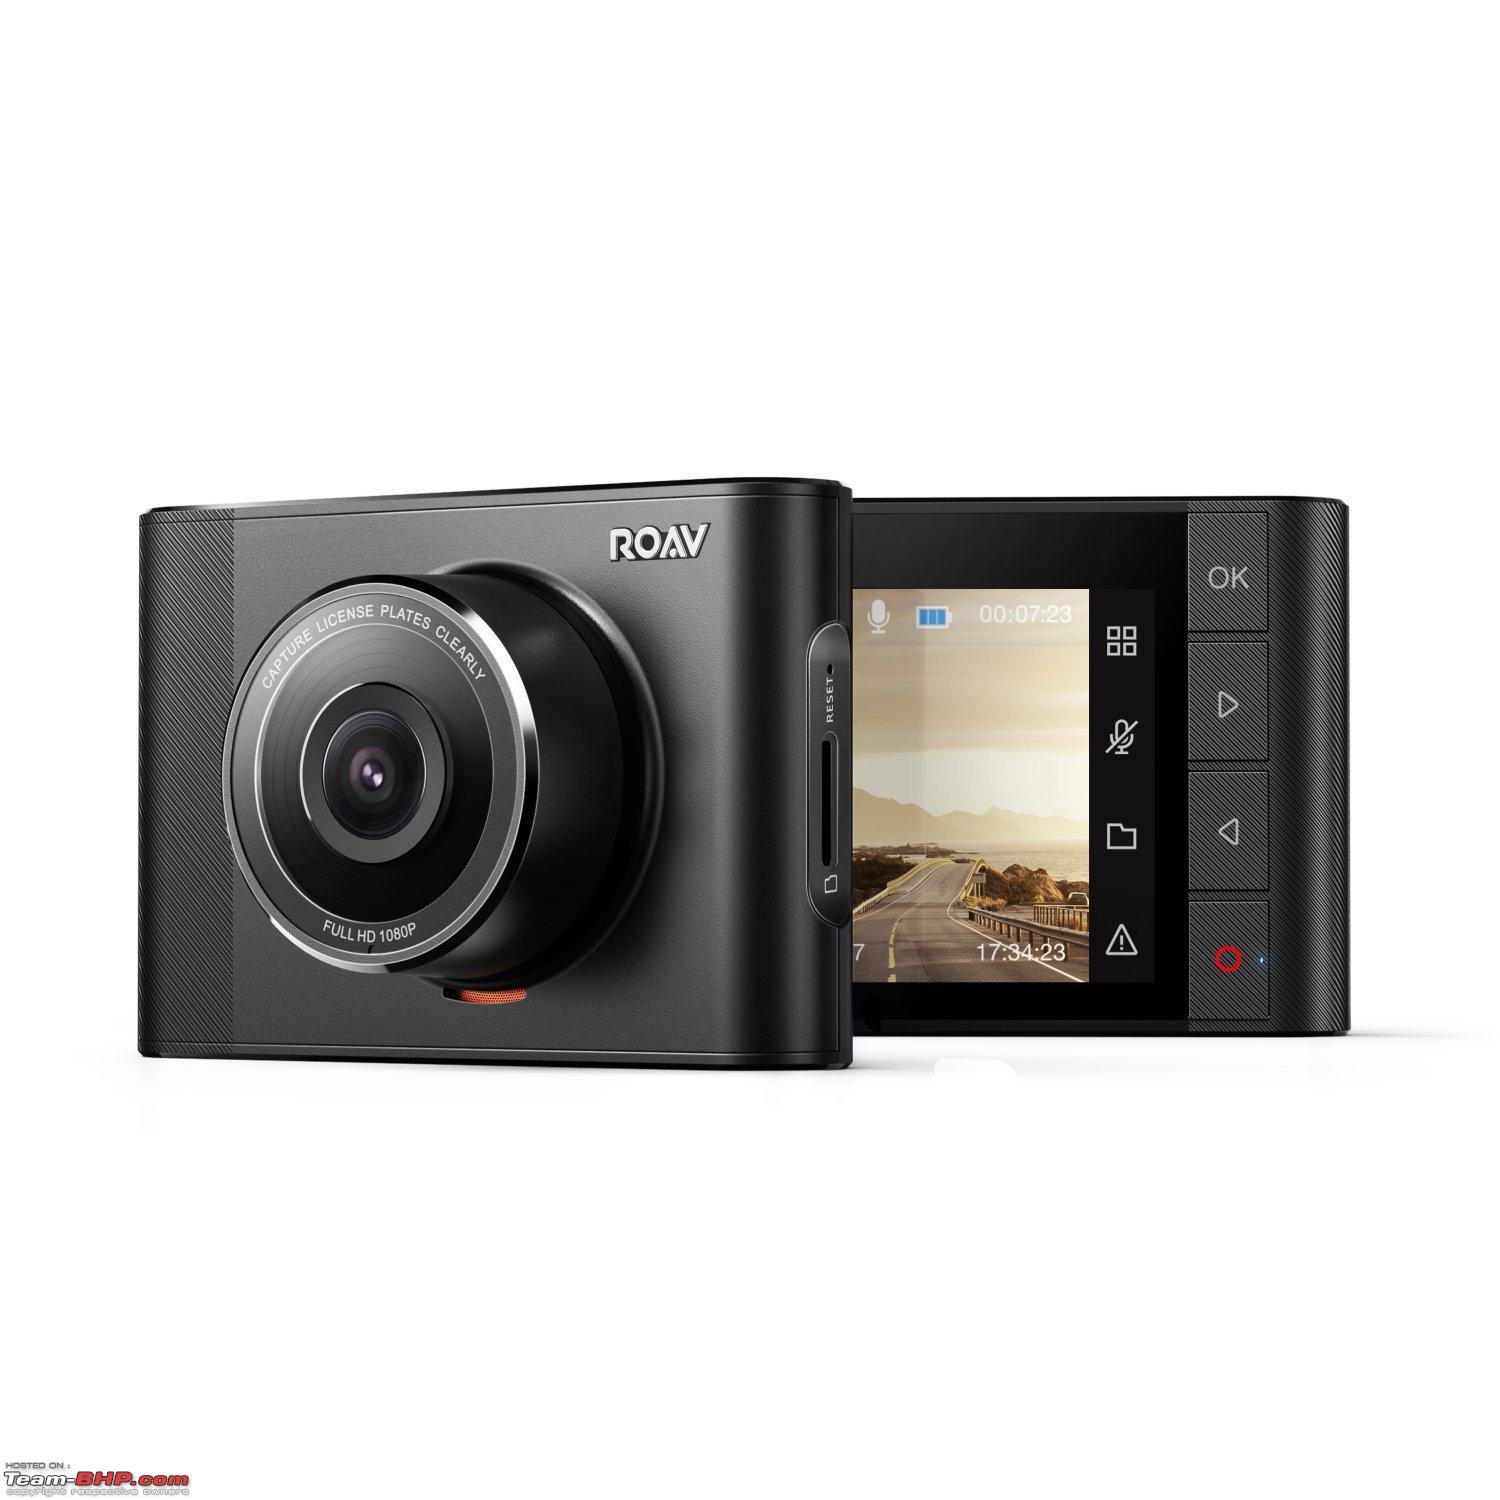 Anker Roav DashCam Duo, Dual FHD 1080p Dash Cam! - Product Reviews